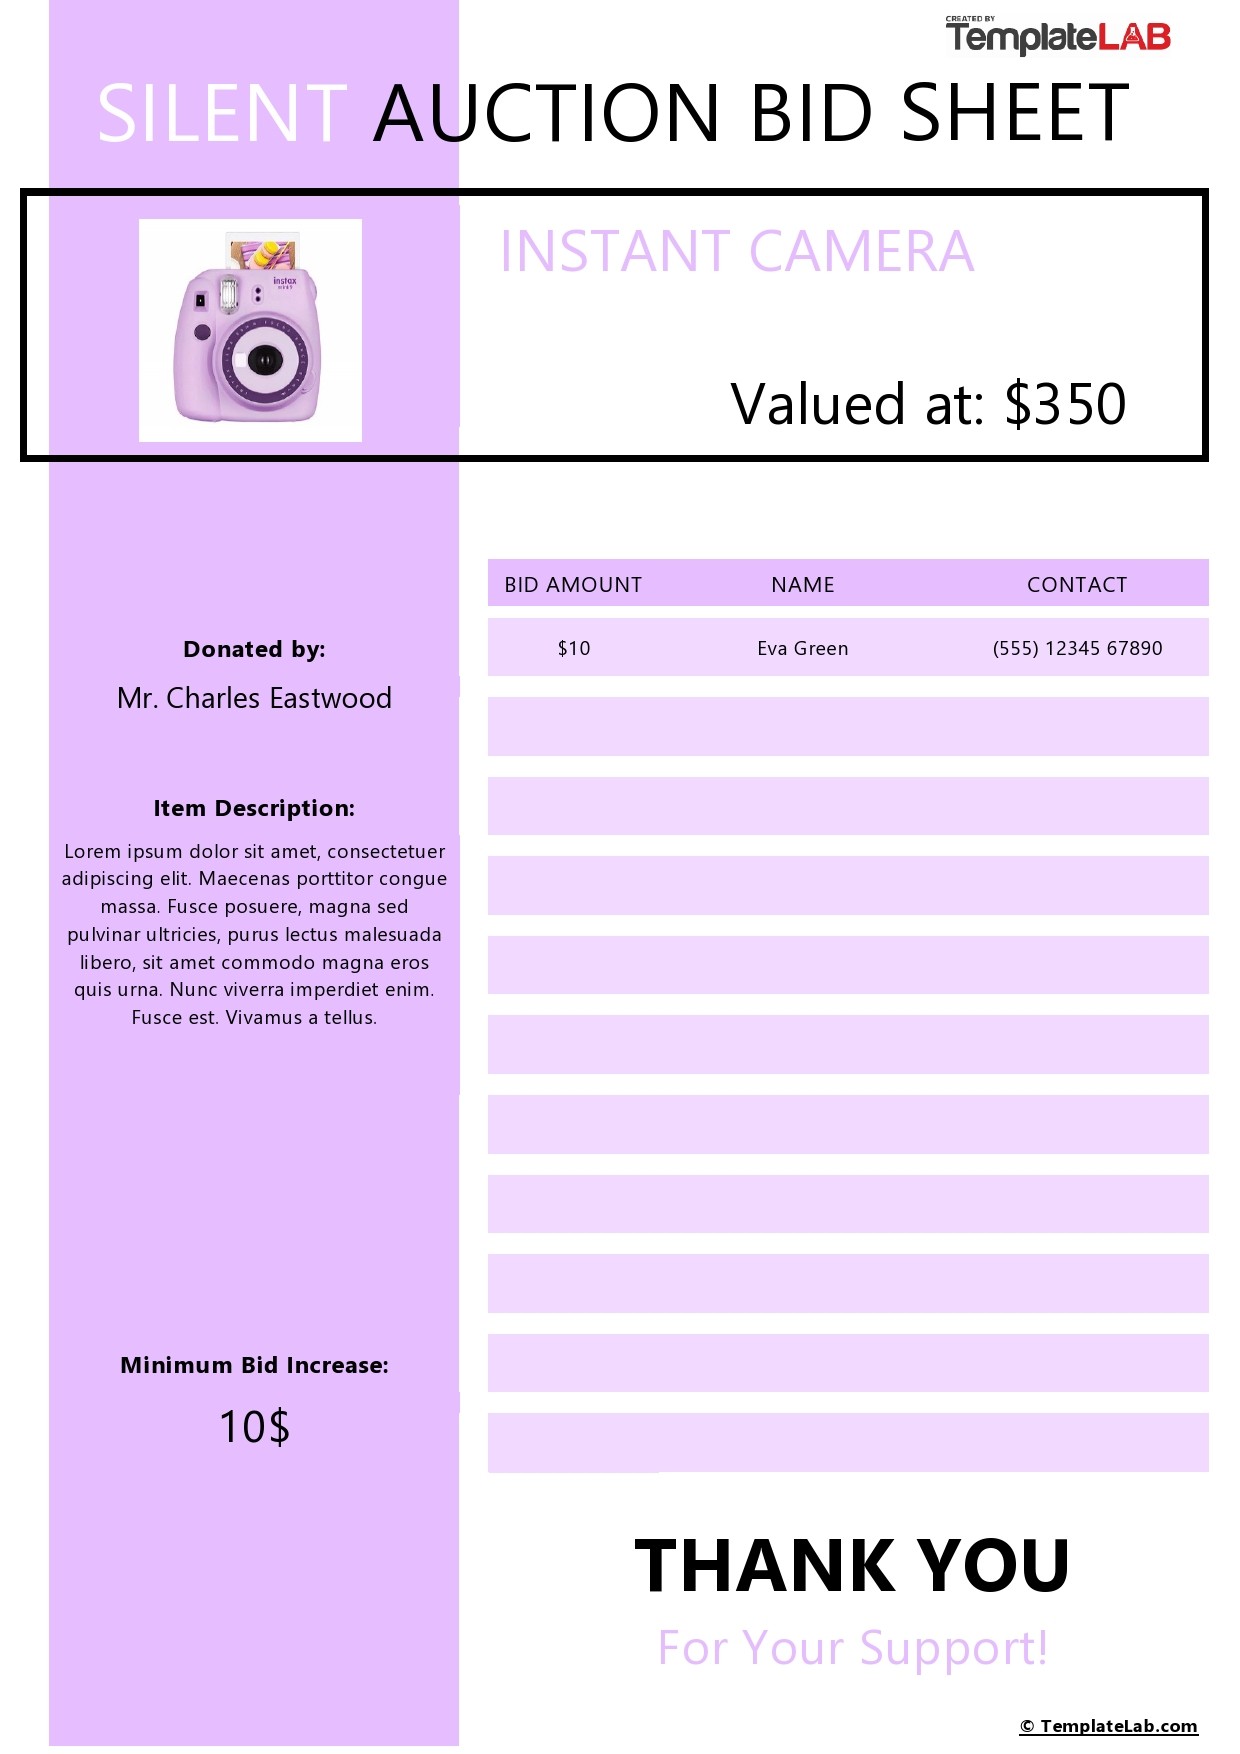 40+ Silent Auction Bid Sheet Templates [Word, Excel] ᐅ TemplateLab